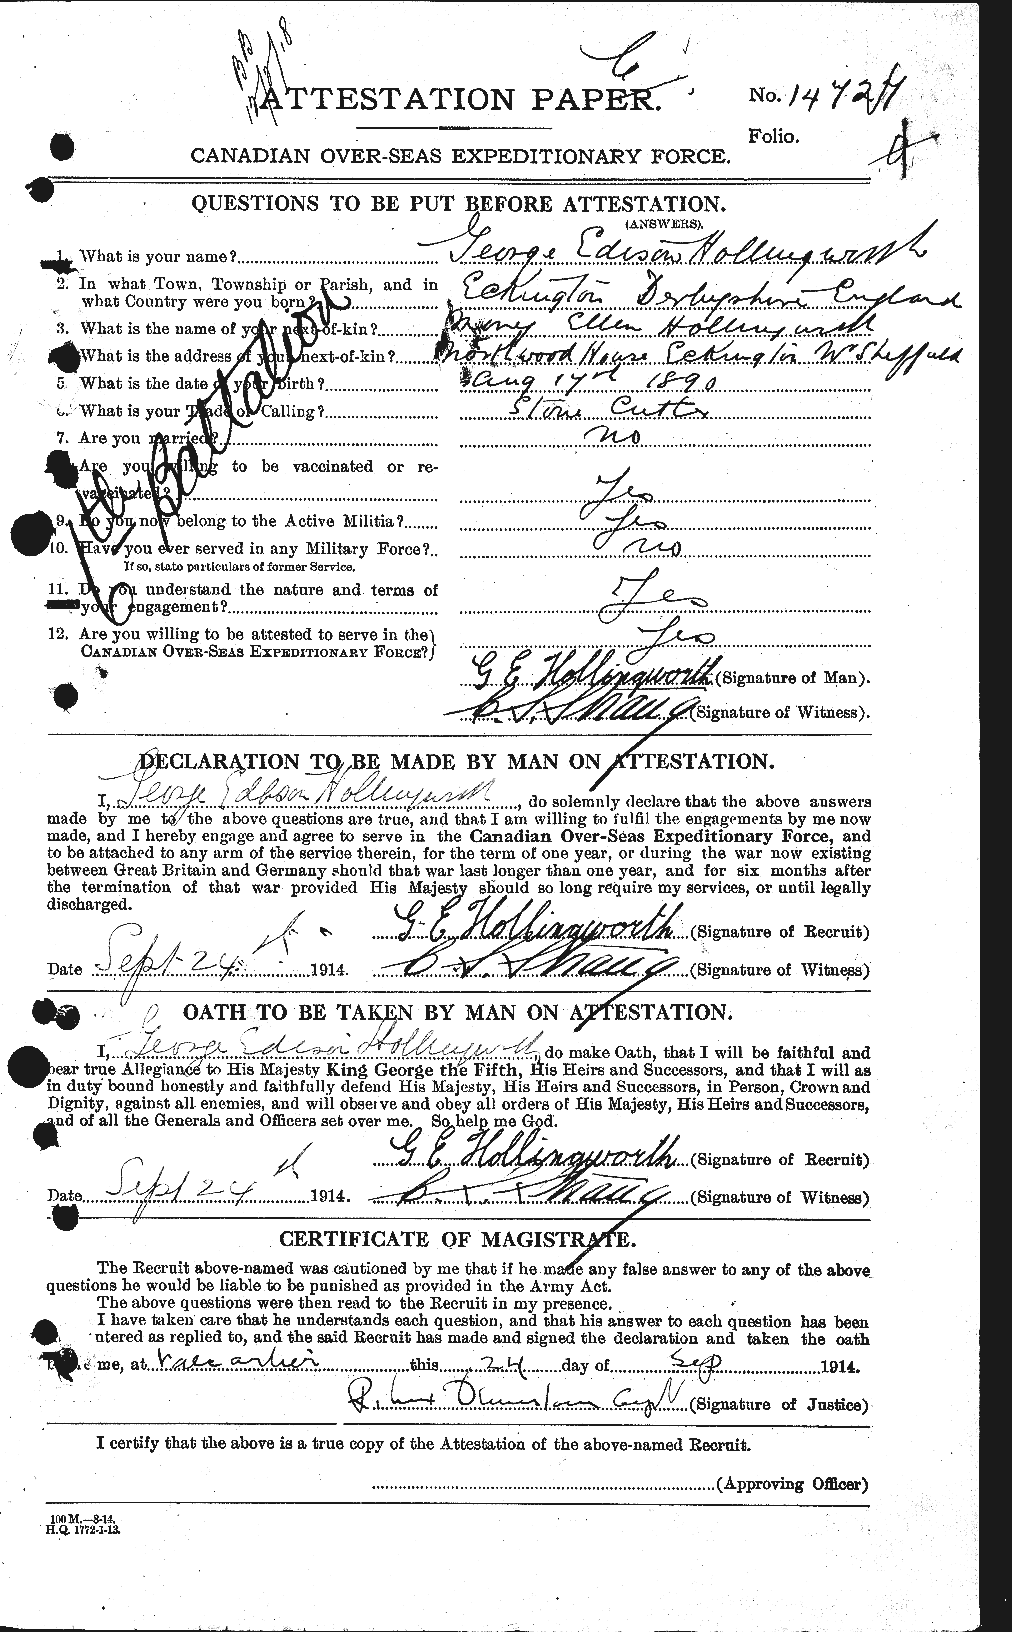 Attestation record: George Edison Hollingworth